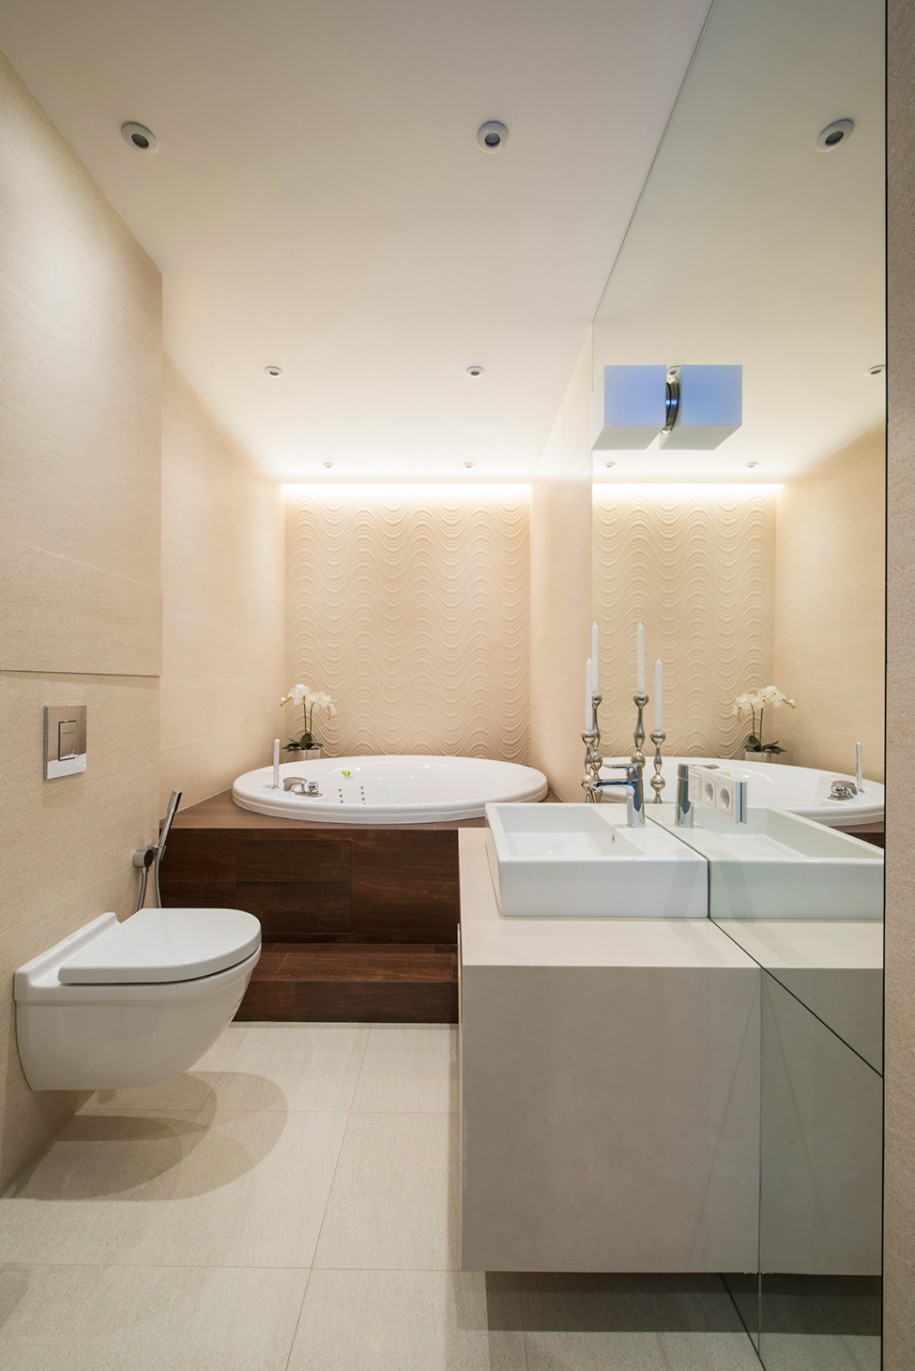 25 Small But Luxury Bathroom Design Ideas